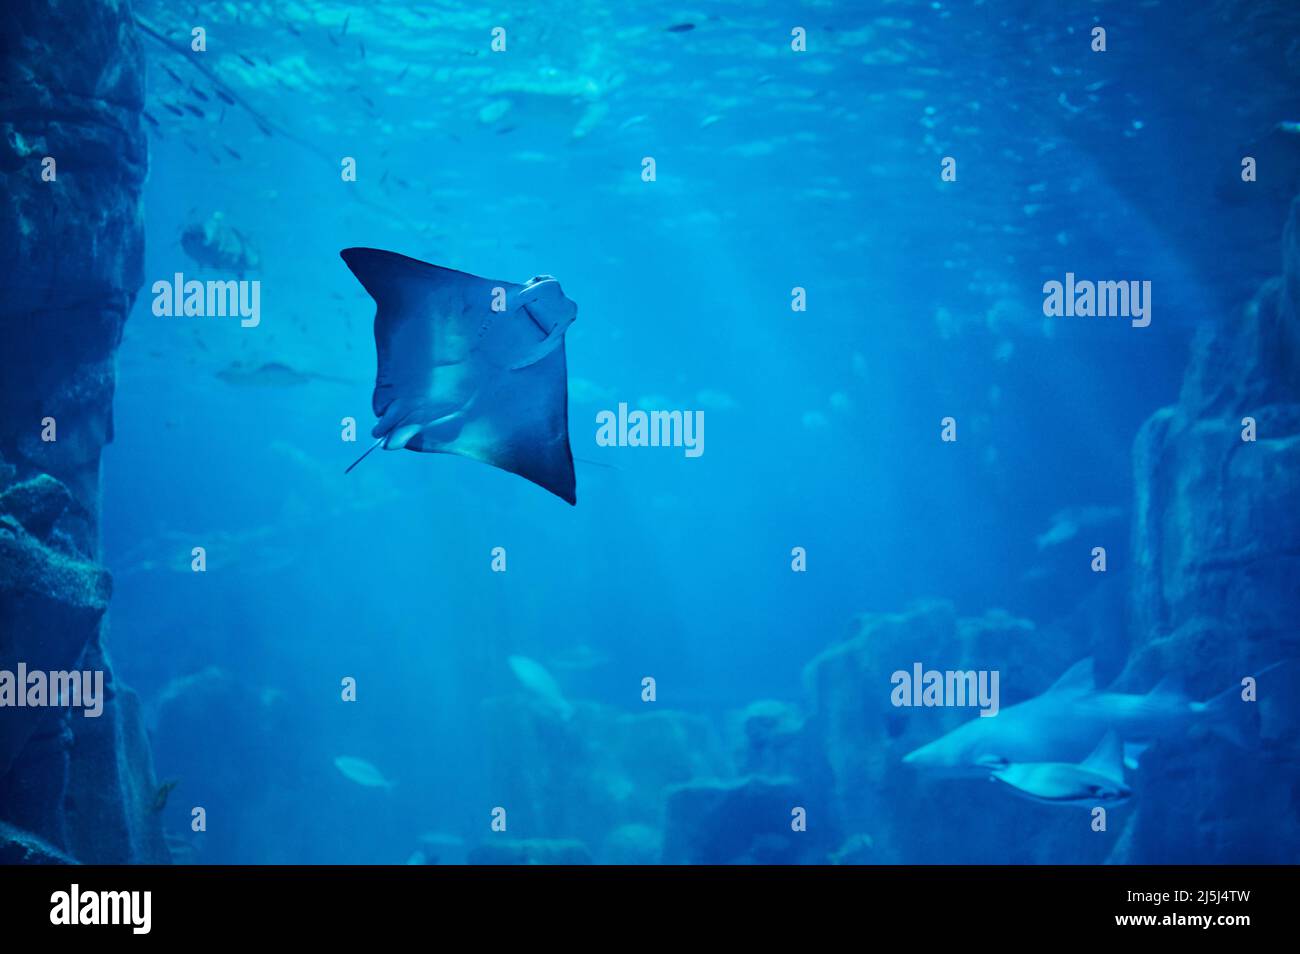 Stingray swim in deep blue water on sea background Stock Photo